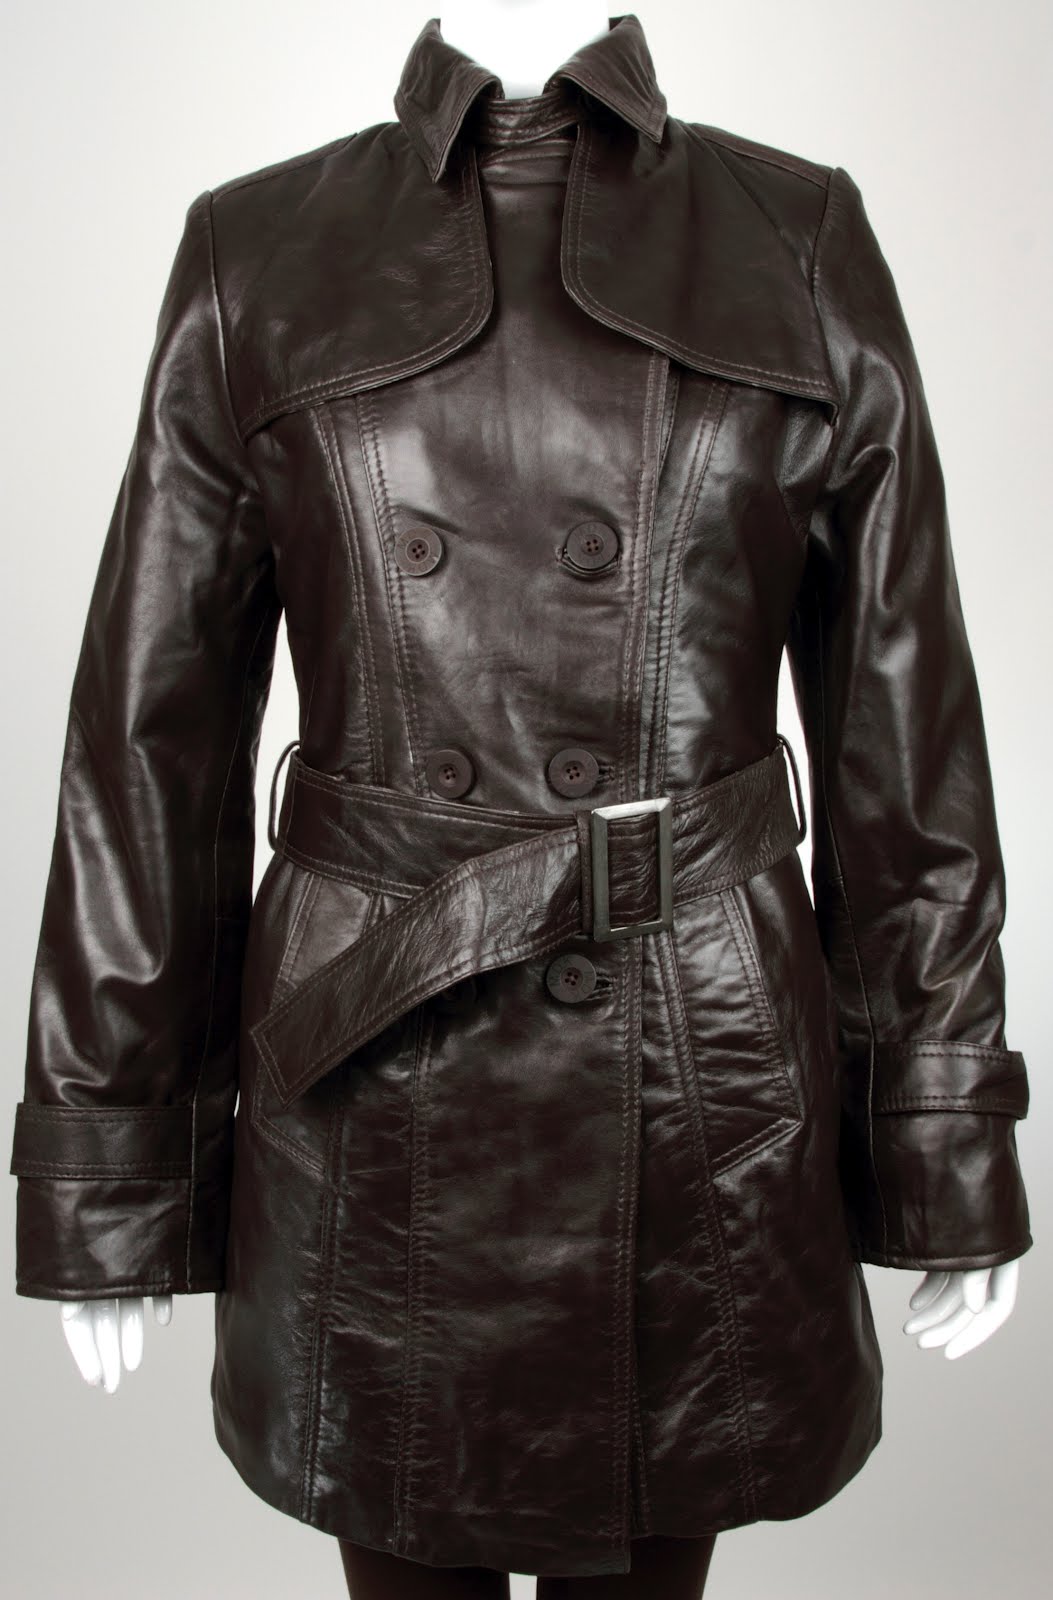 Leather Celebrities & Leather Ladies: Sponsors